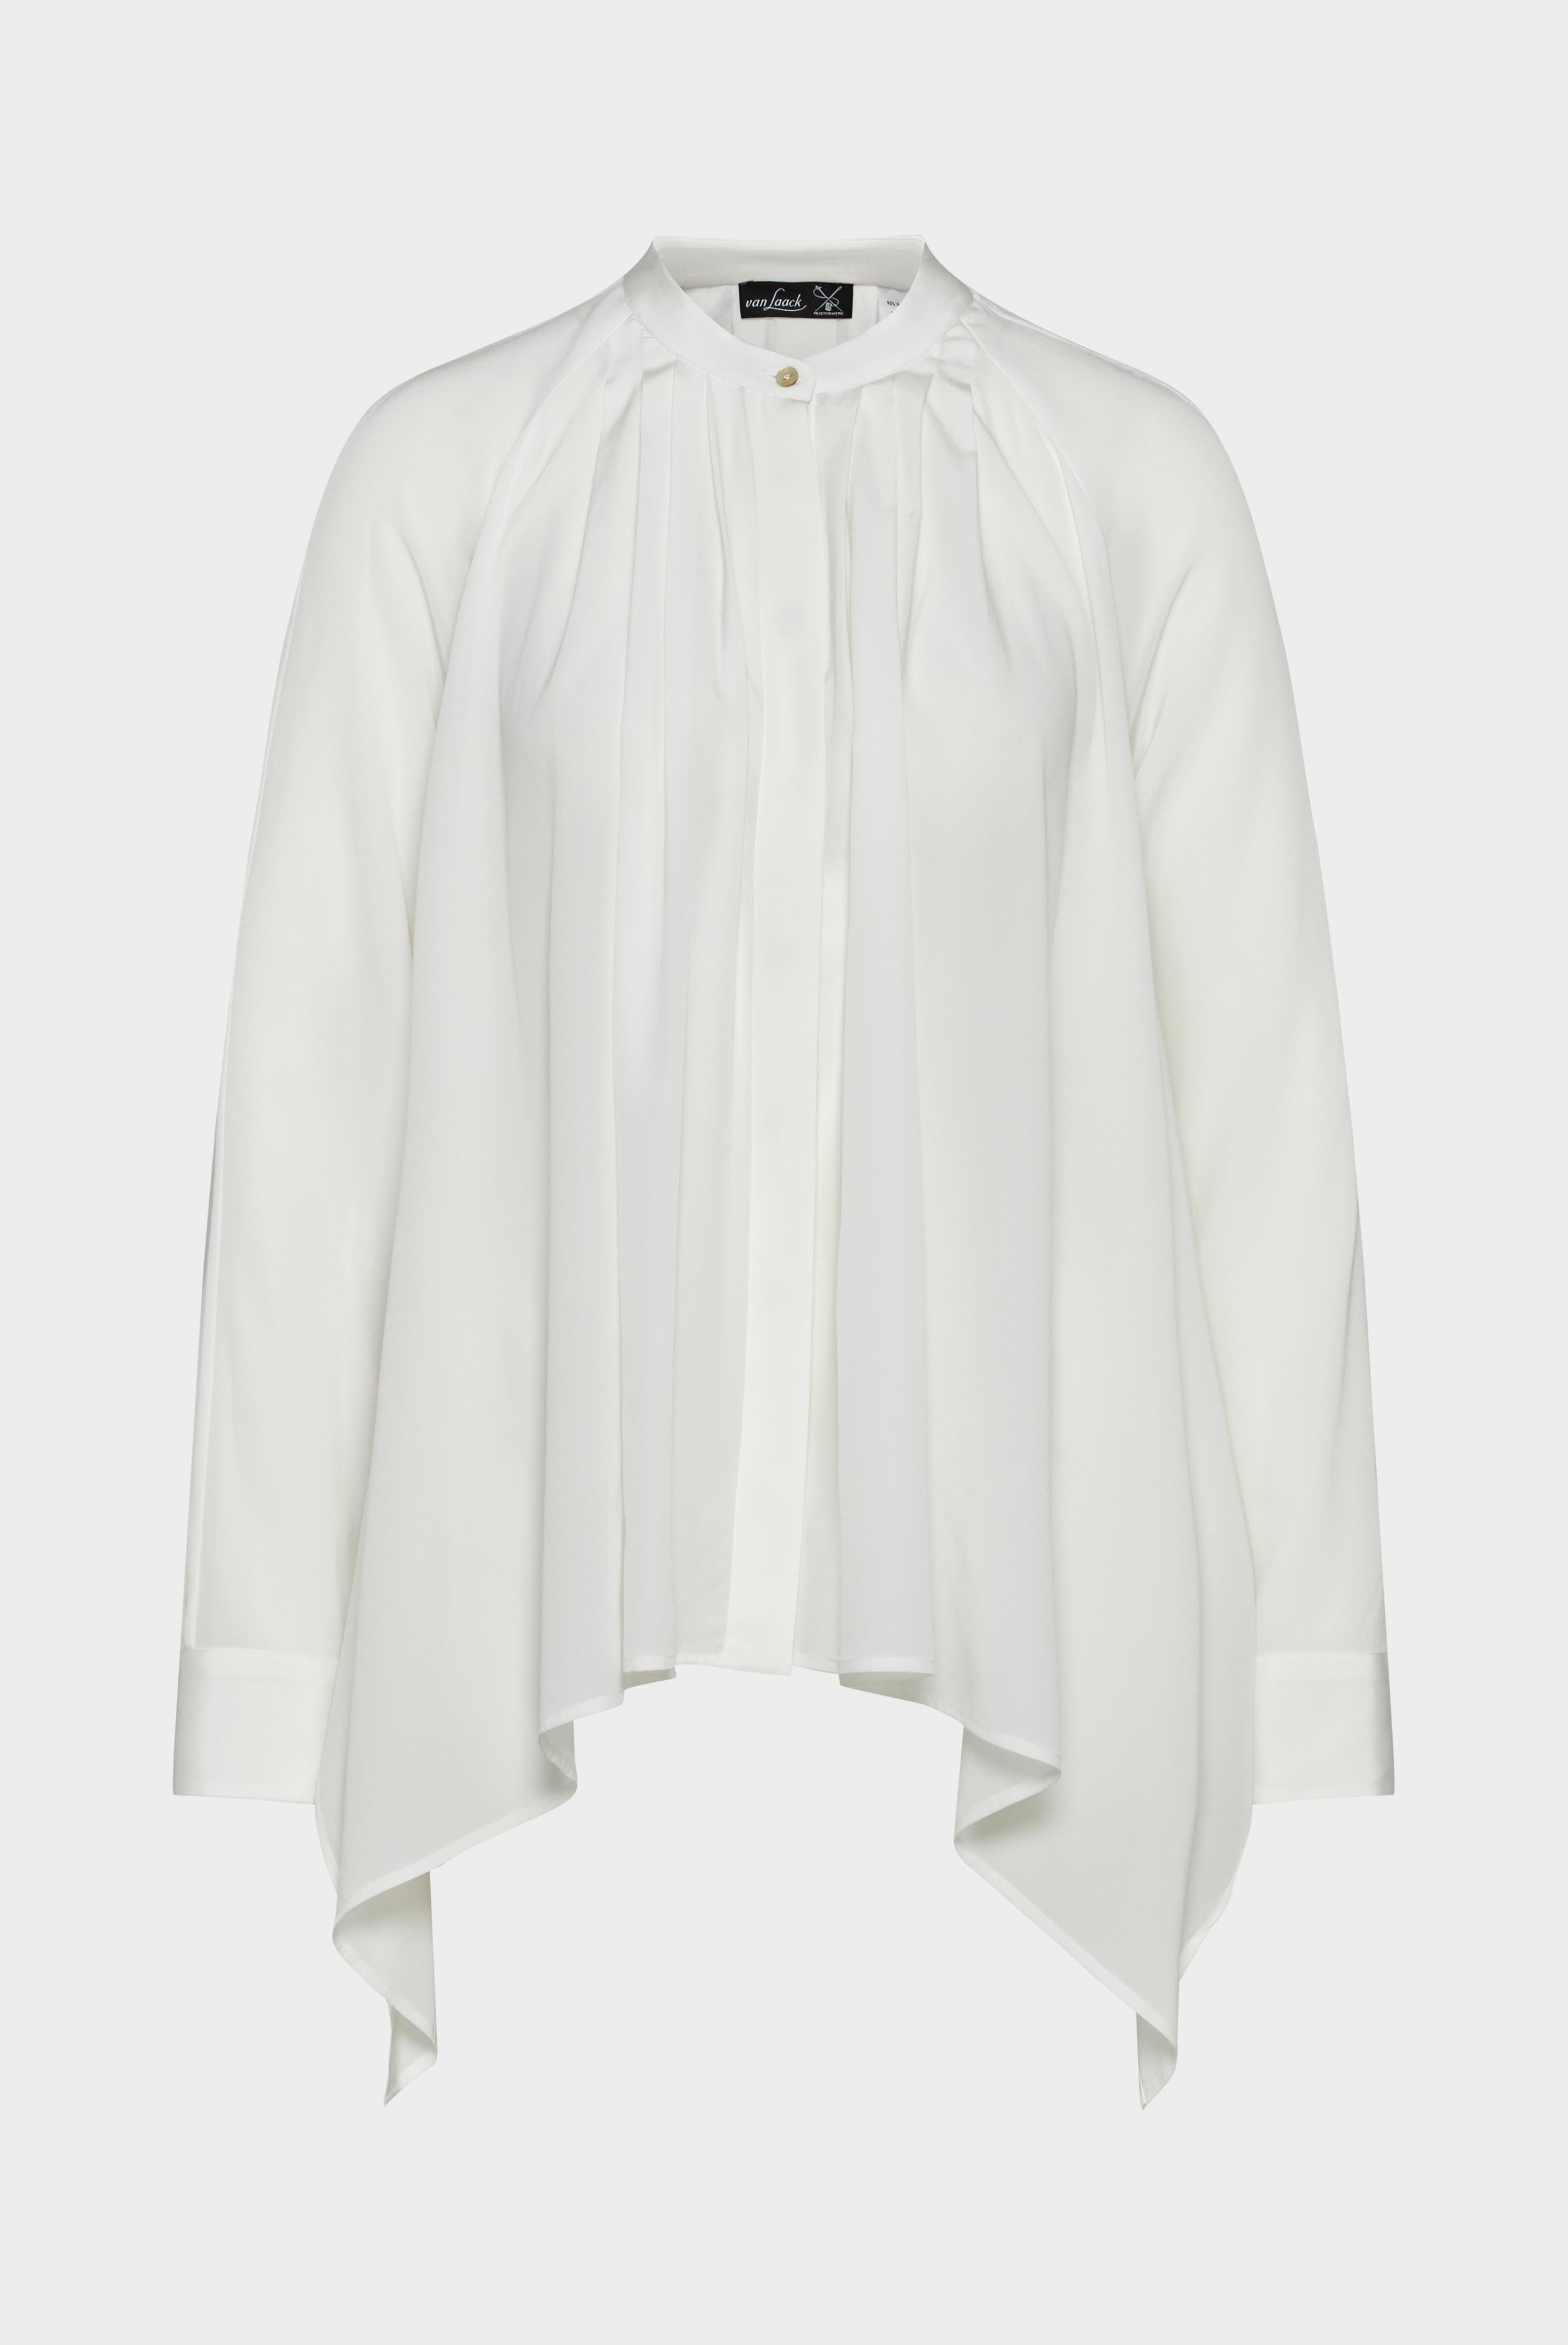 Meisterwerk Blouses+Crepe blouse with asymmetric hem white+05.525P.07.155553.105.32